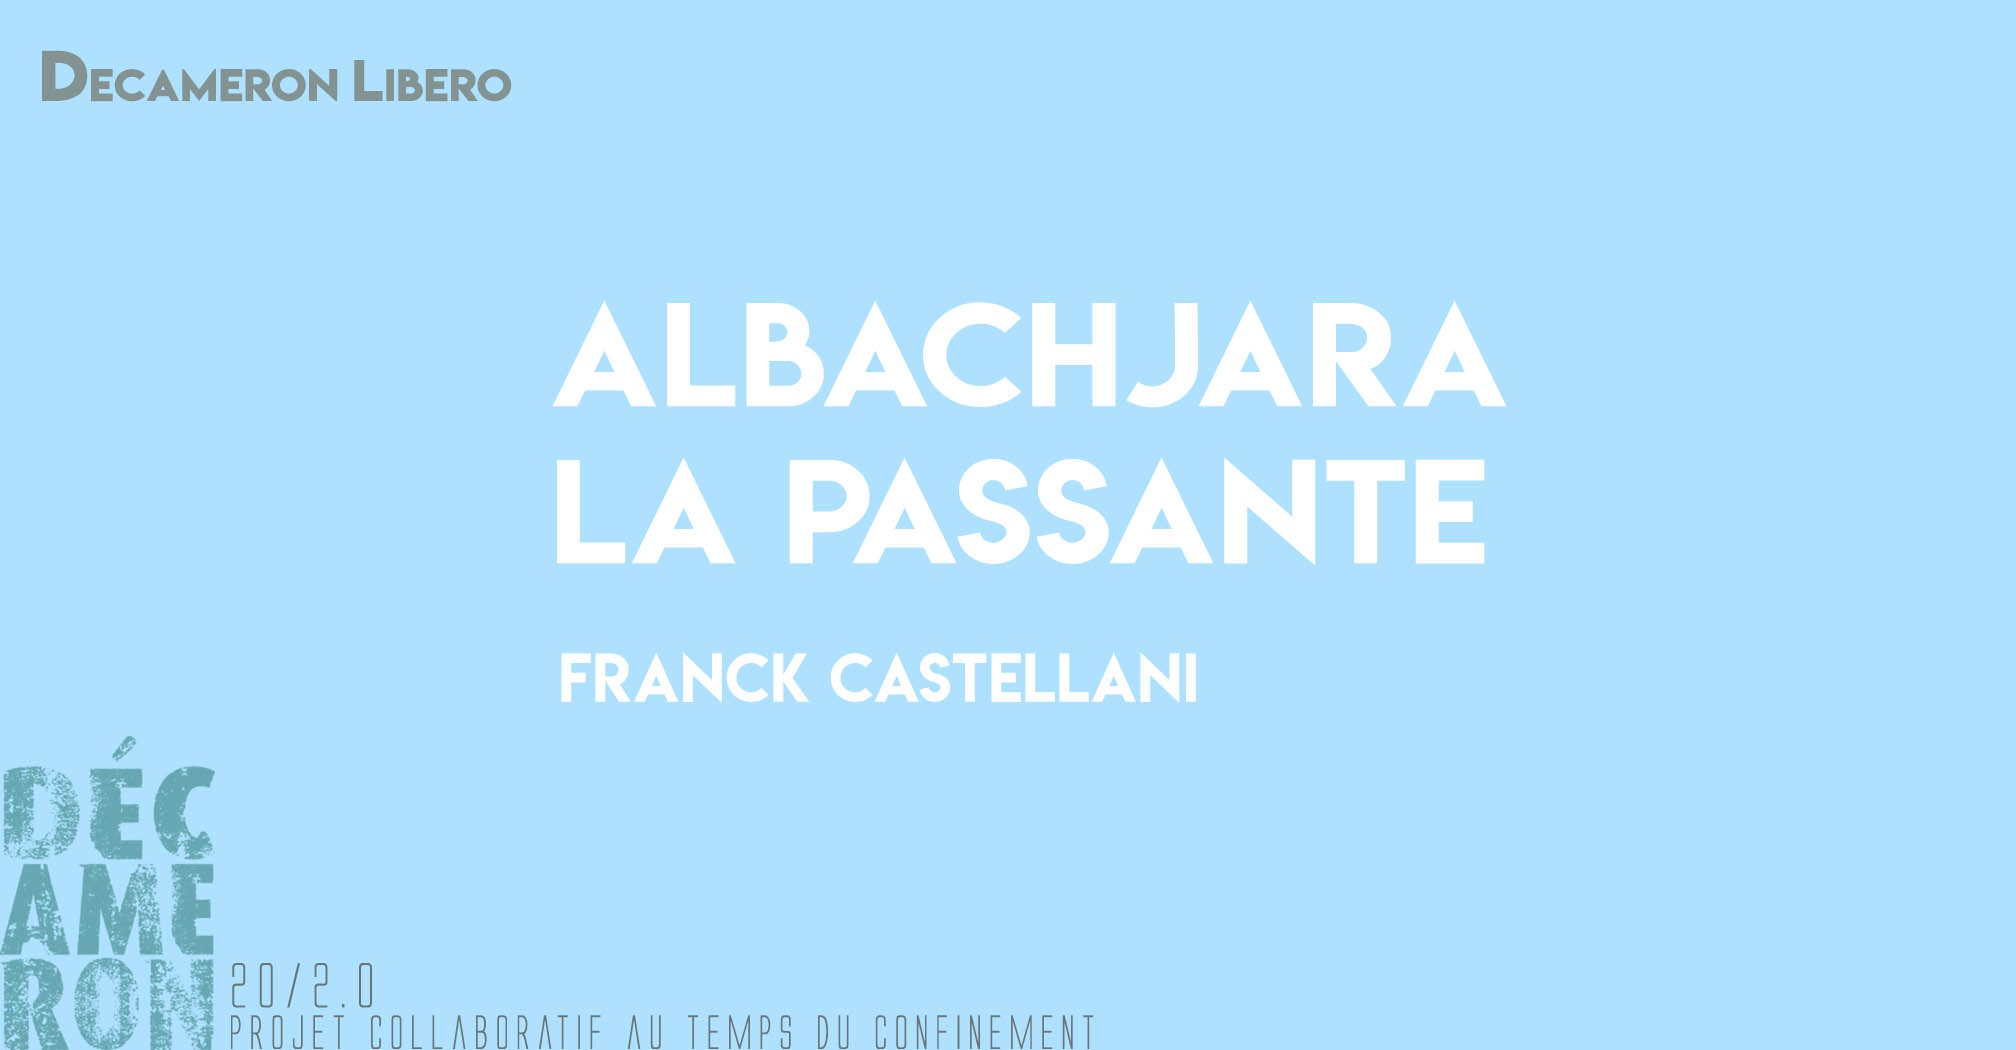 Albachjara / La passante - Franck Castellani